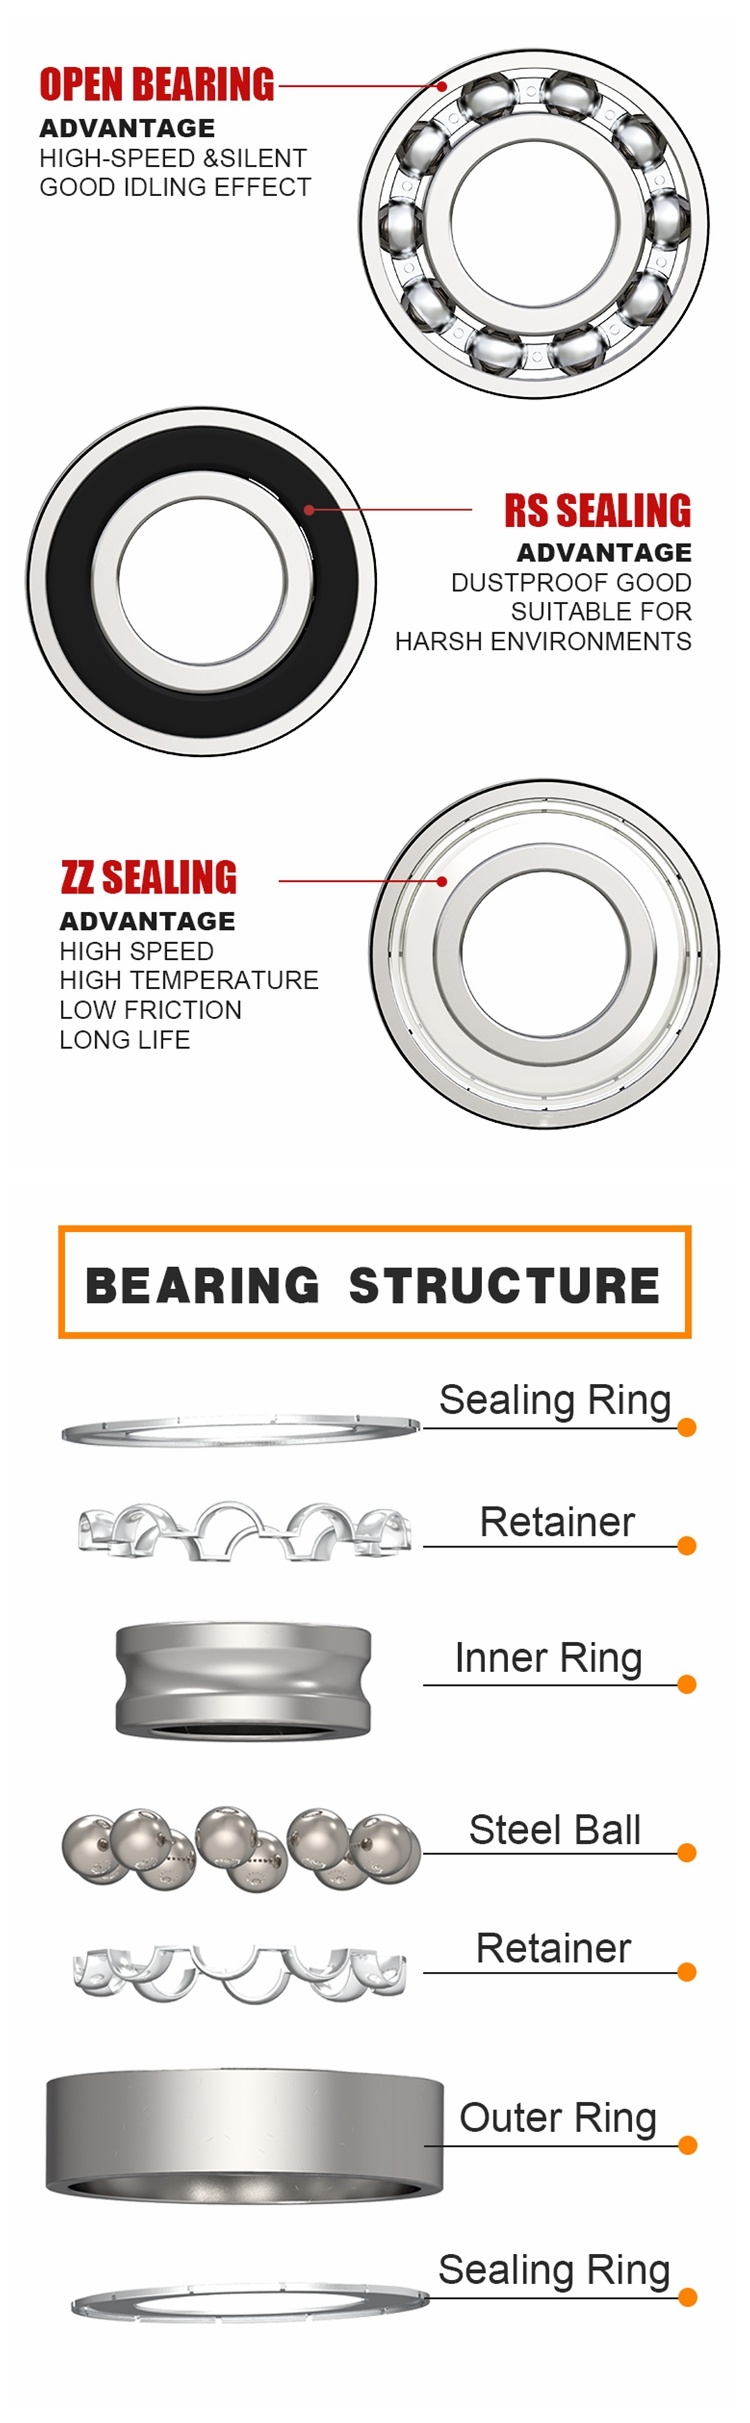 ABEC-3 Spindle Bearing Z2 V2 696 Zz Ball Bearings